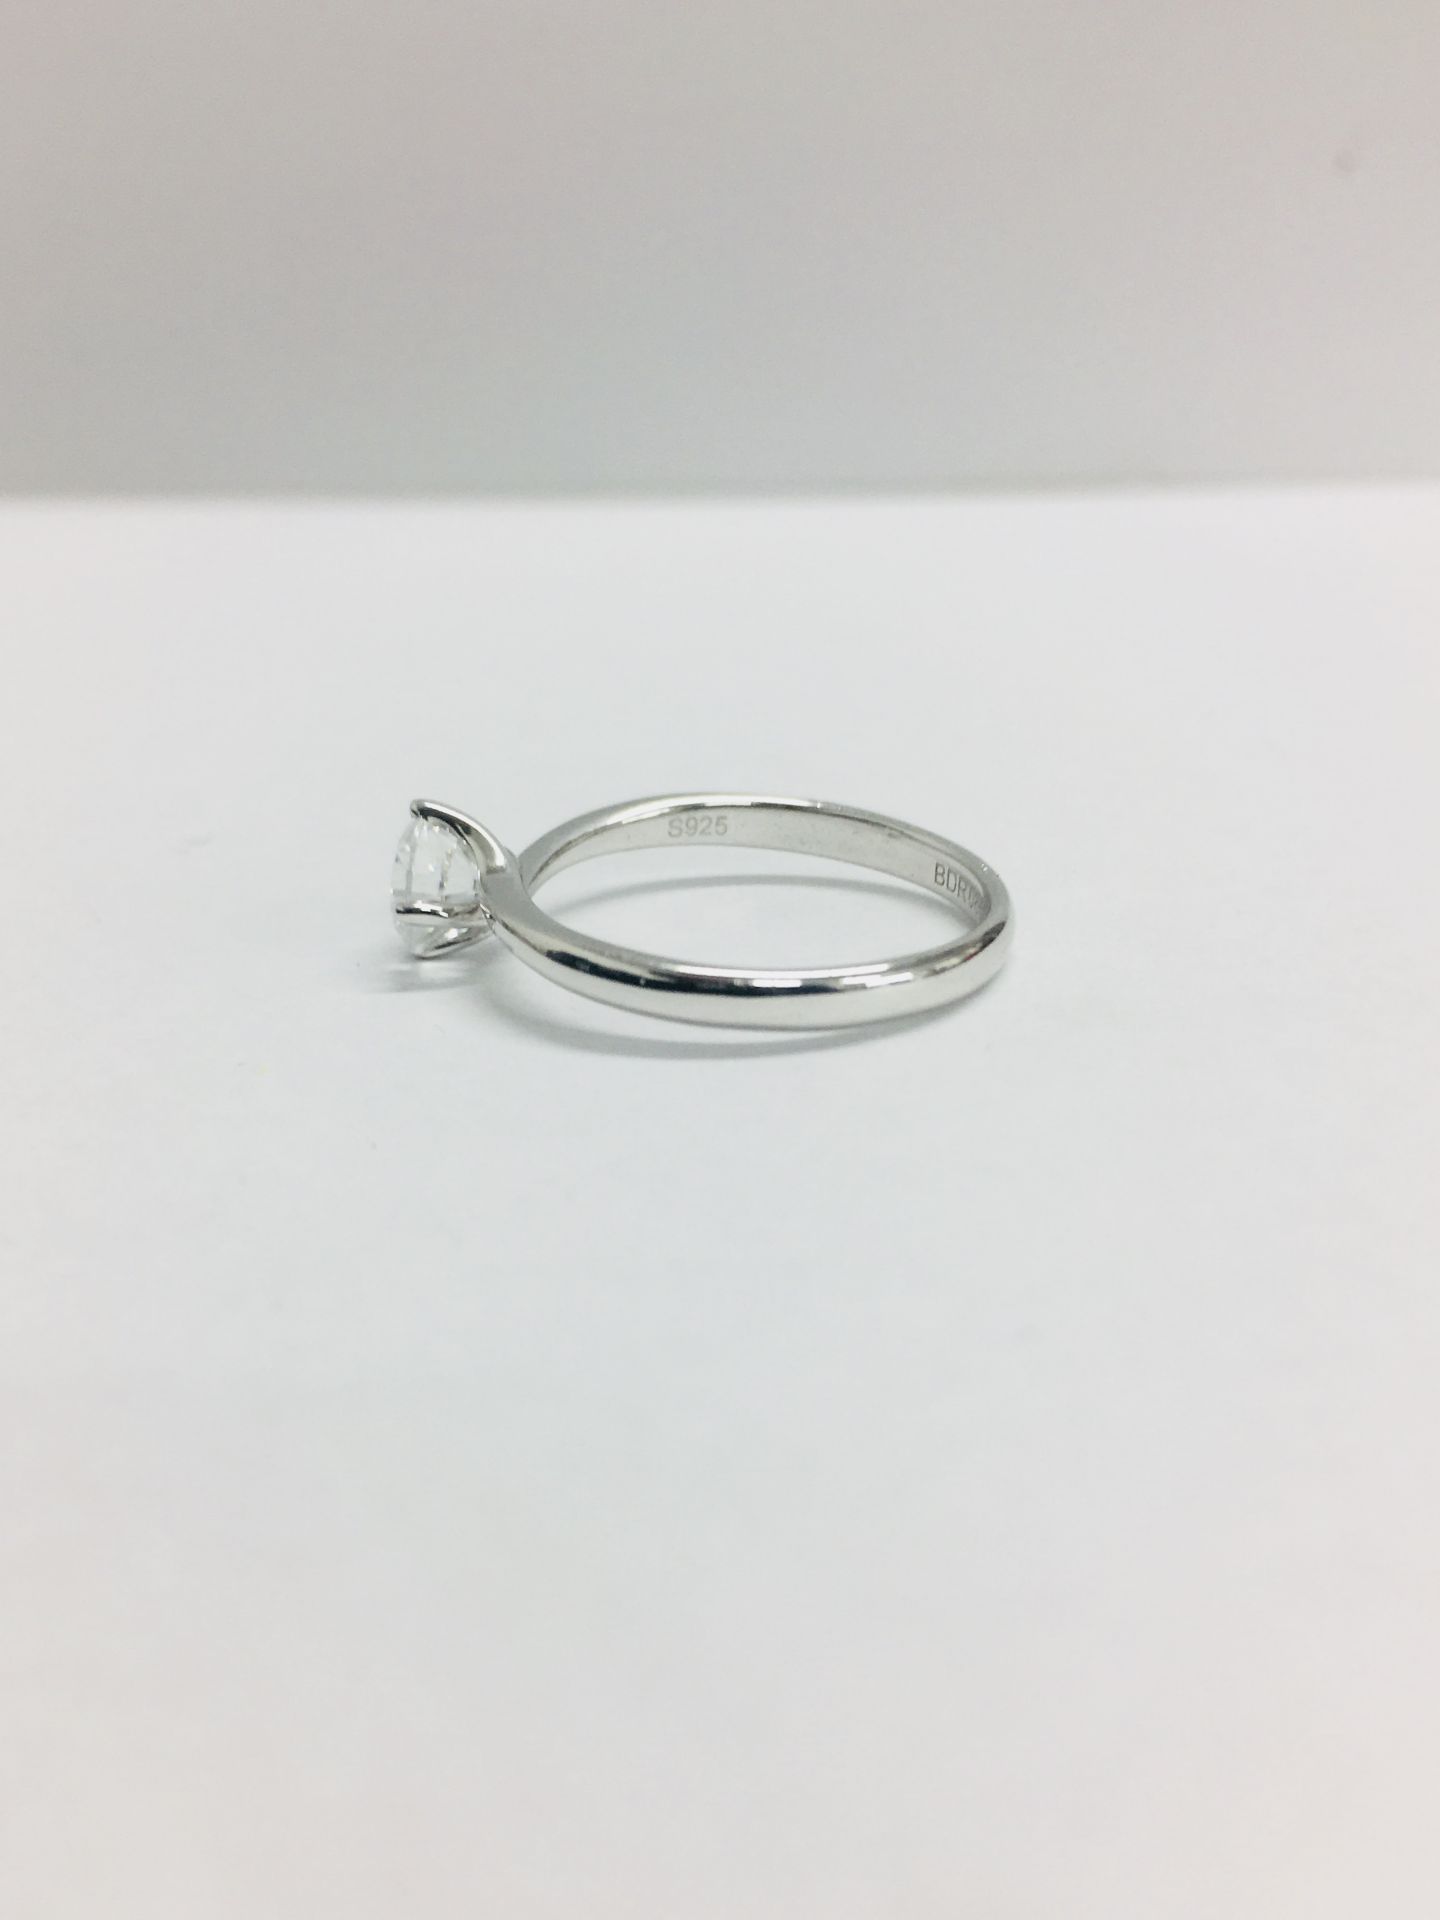 Platinum diamond twist style solitaire ring,0.50ct diamond h colour vs clarity (clarity enhanced), - Image 2 of 4